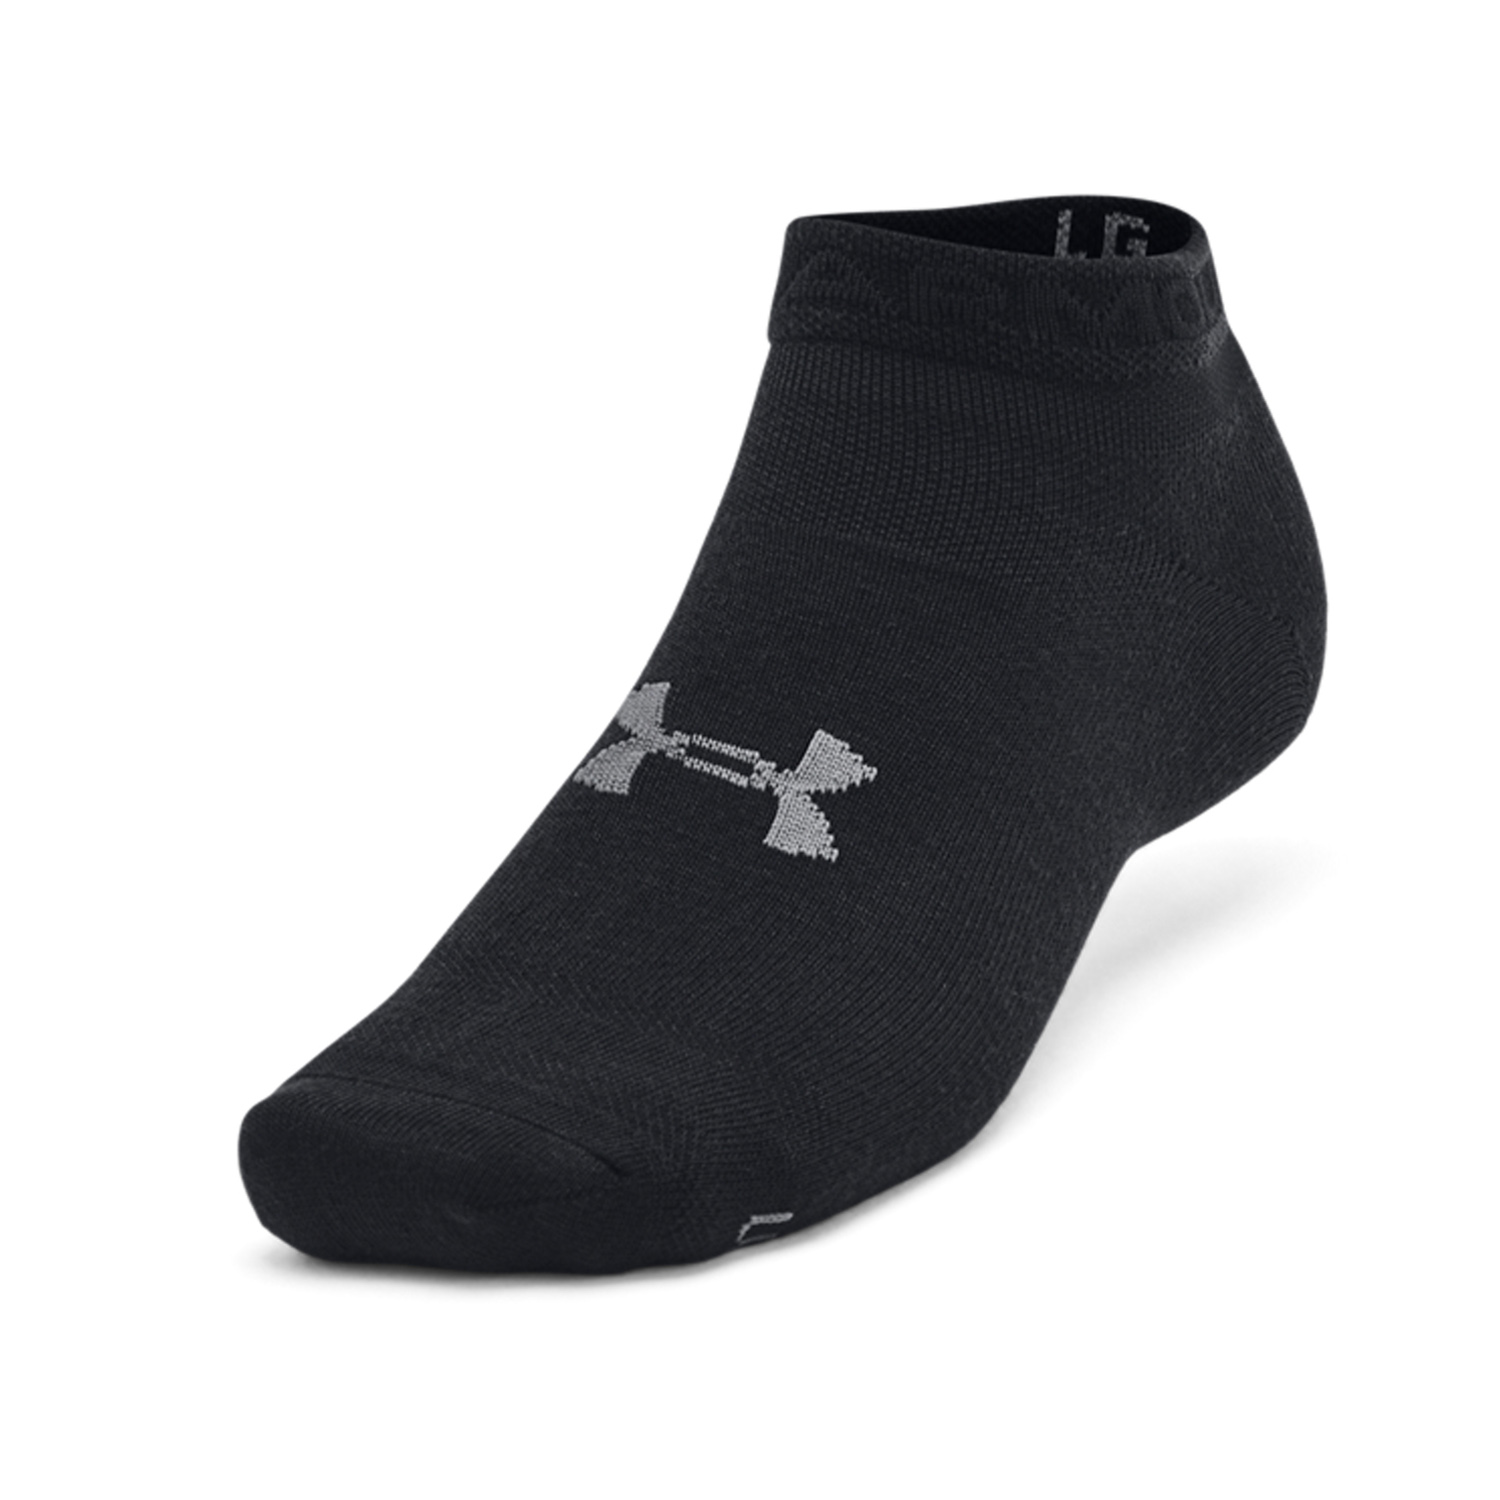 Under Armour Essential x 3 Socks - Black/Castlerock